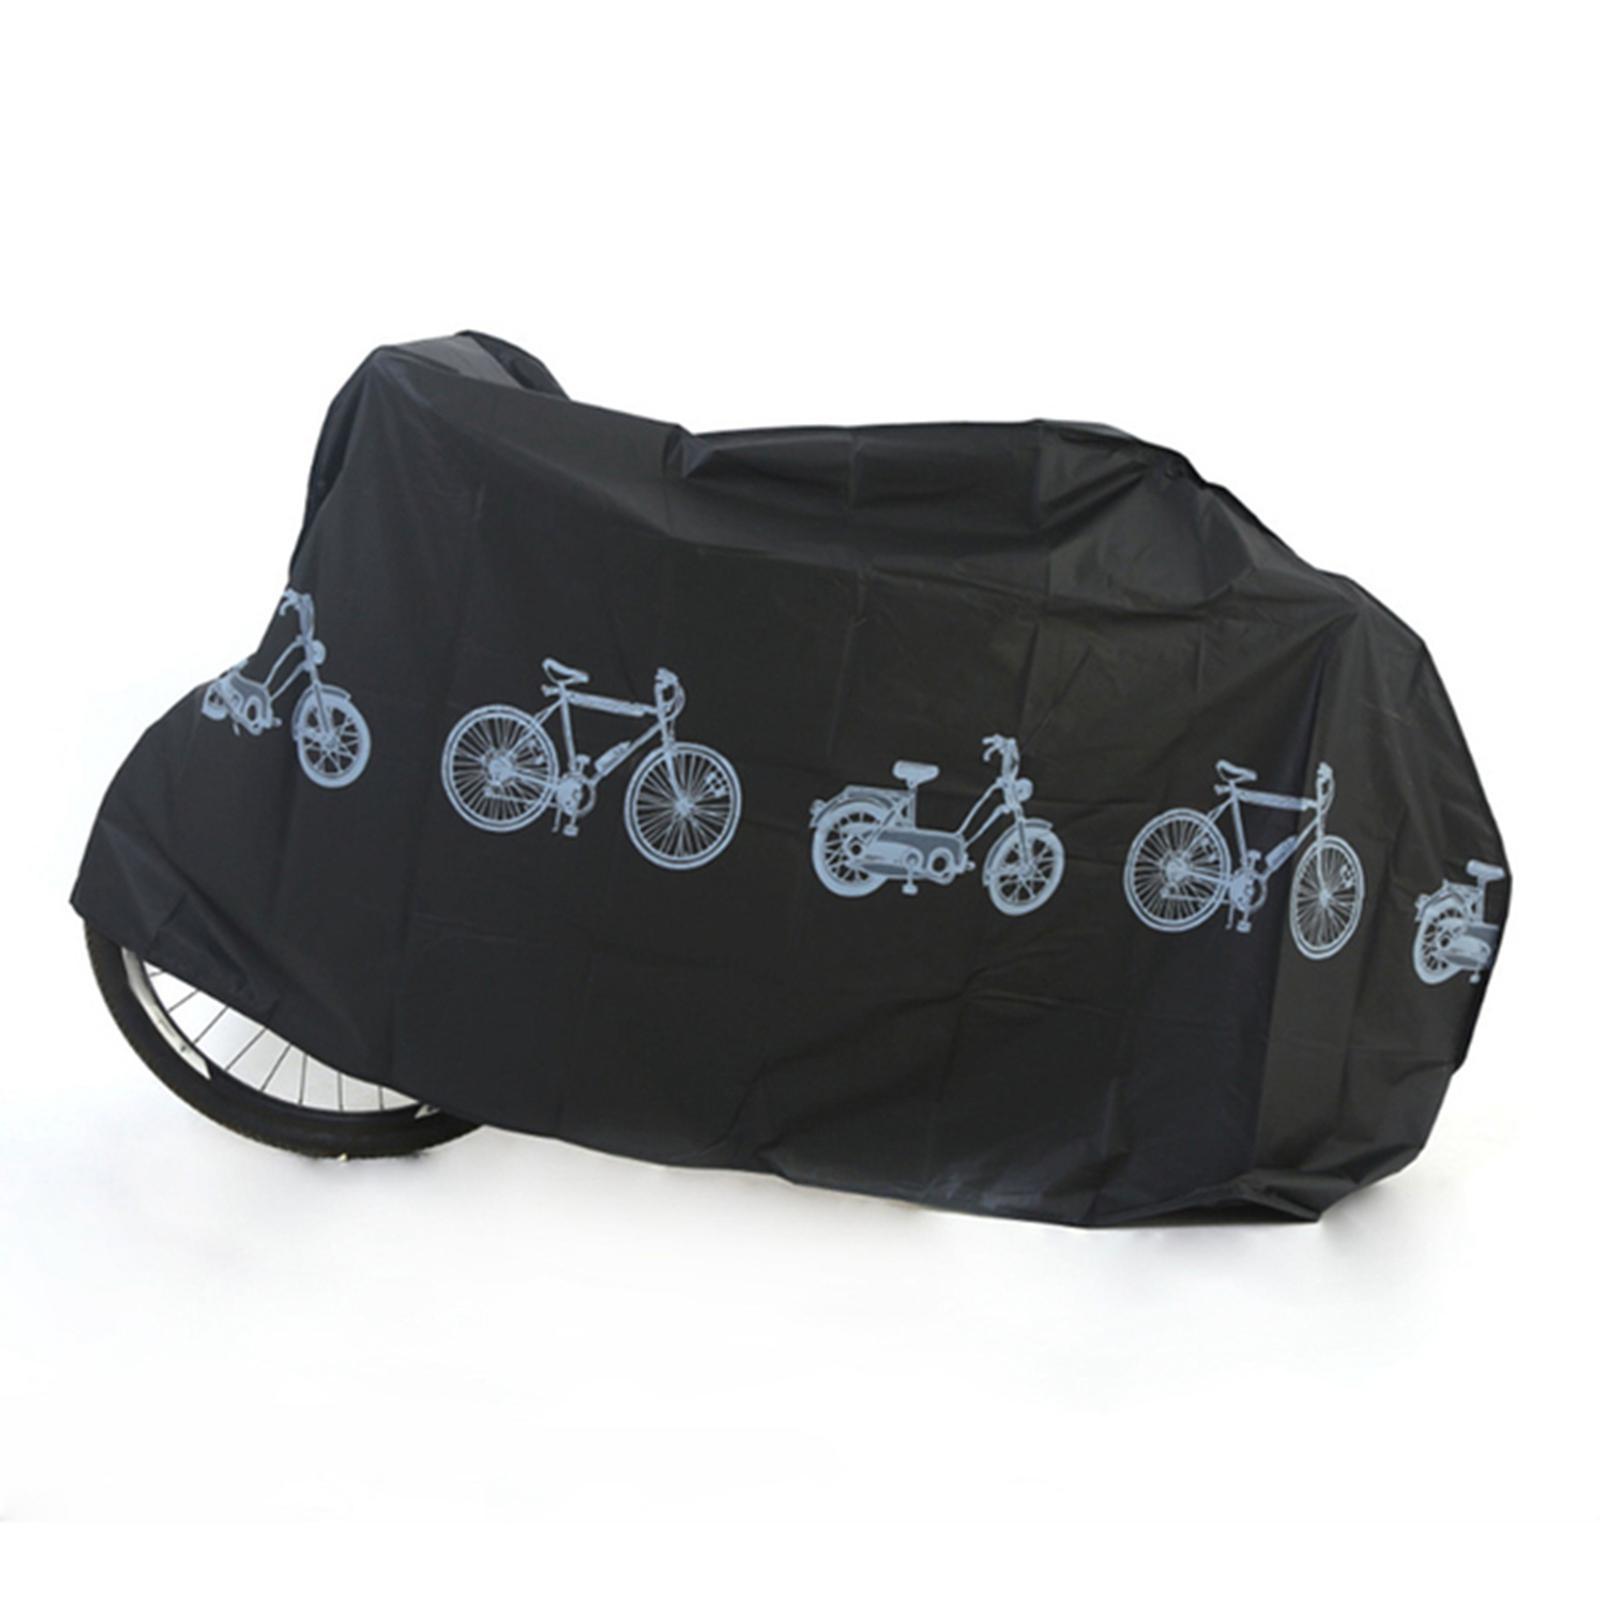 Durable Road Bike Cover Waterproof Sun Protection Storage Dustproof Raincoat